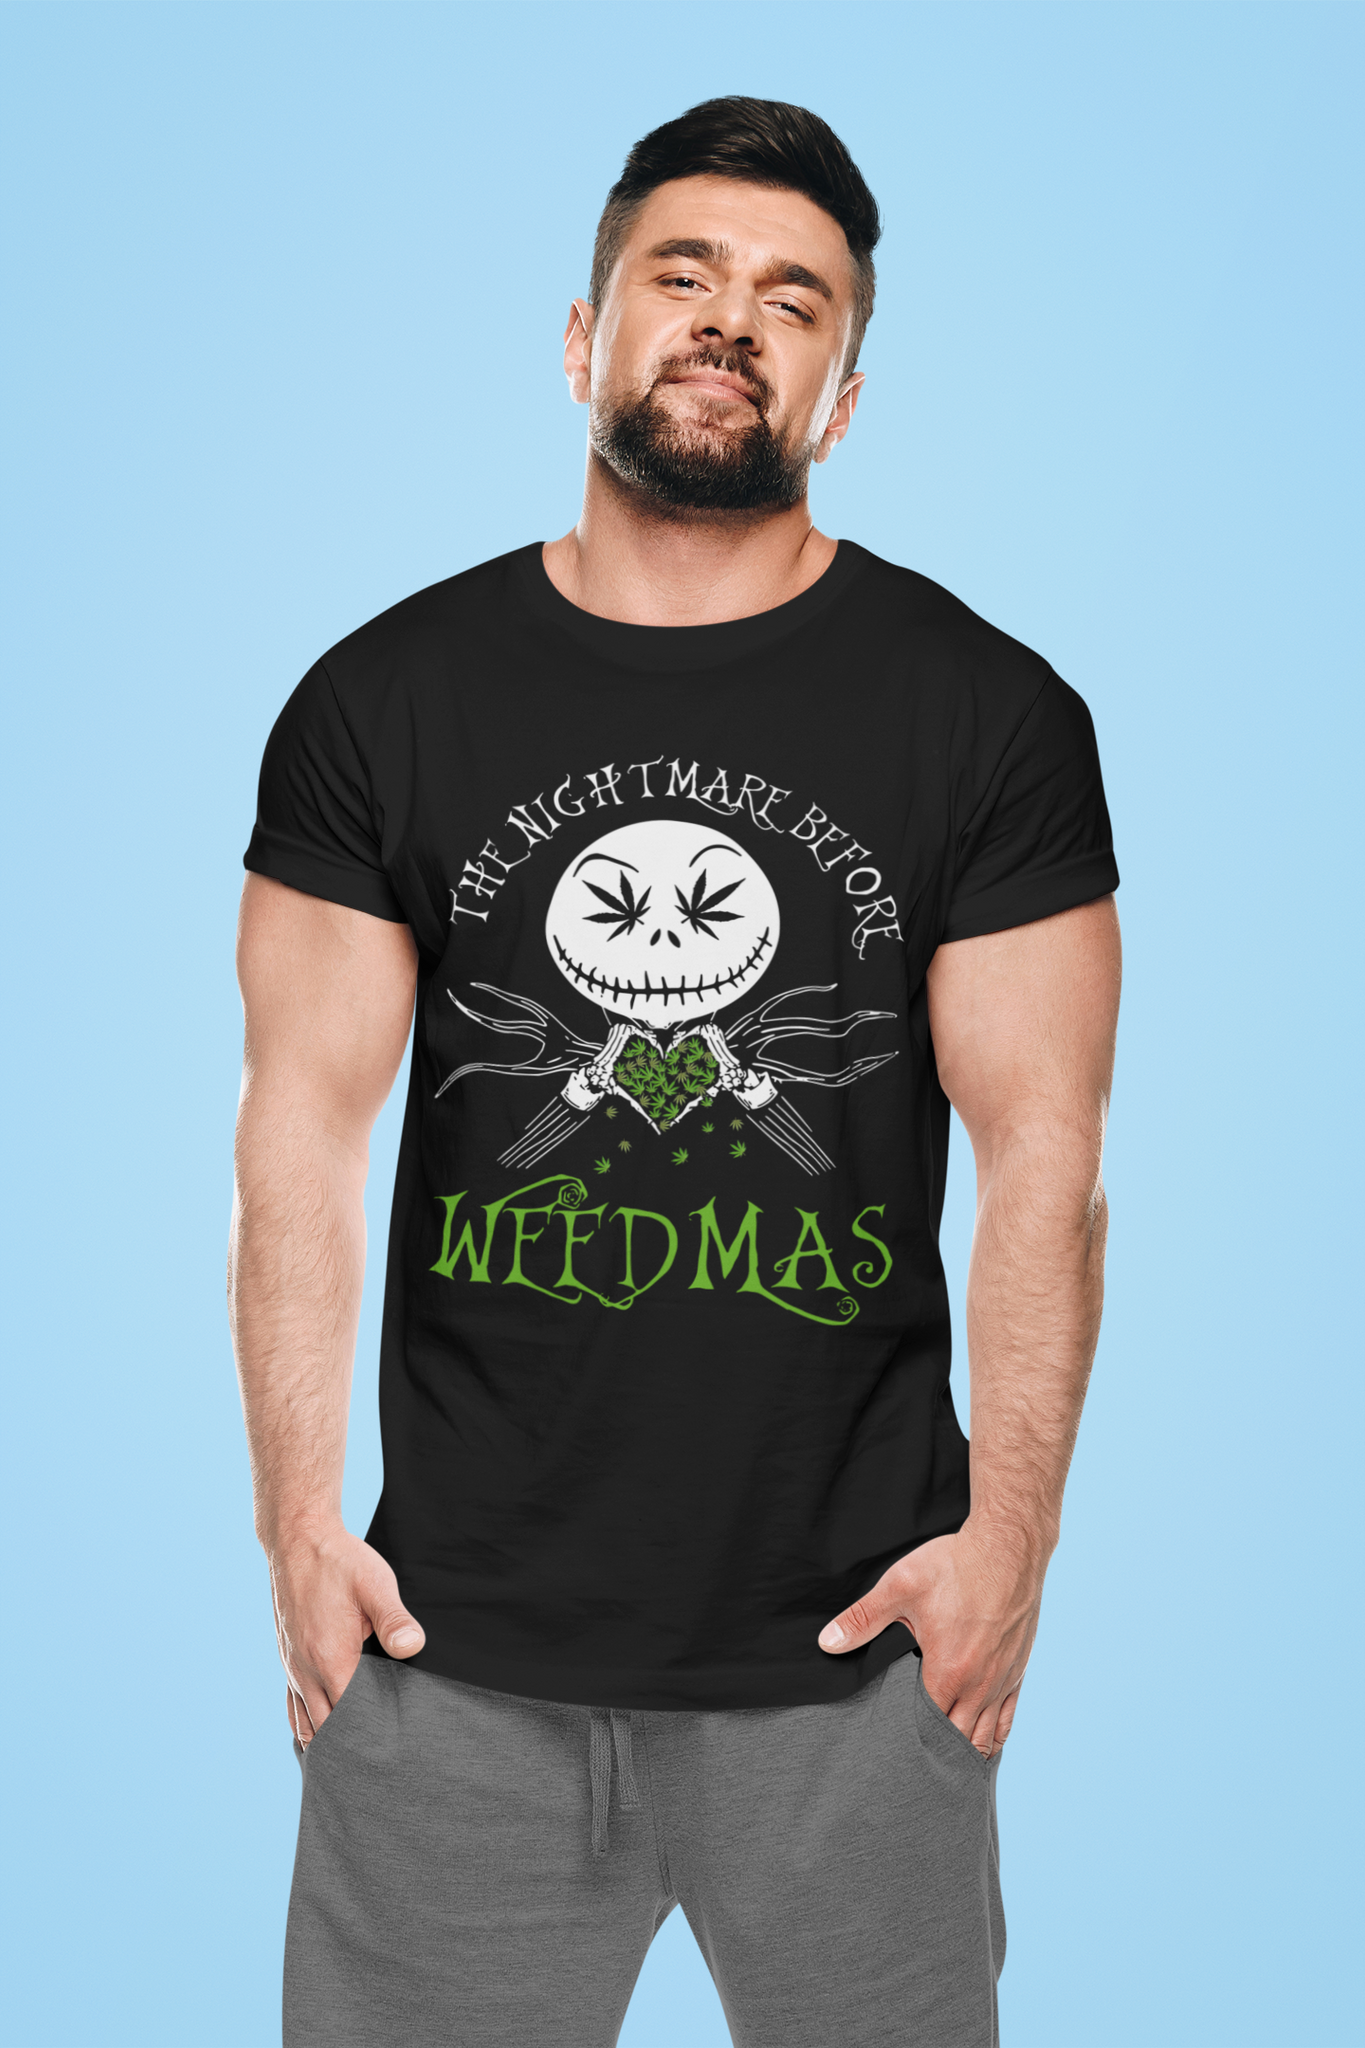 Nightmare Before Christmas T Shirt, Jack Skellington T Shirt, The Nightmare Before Weedmas Tshirt, Xmas Halloween Gifts